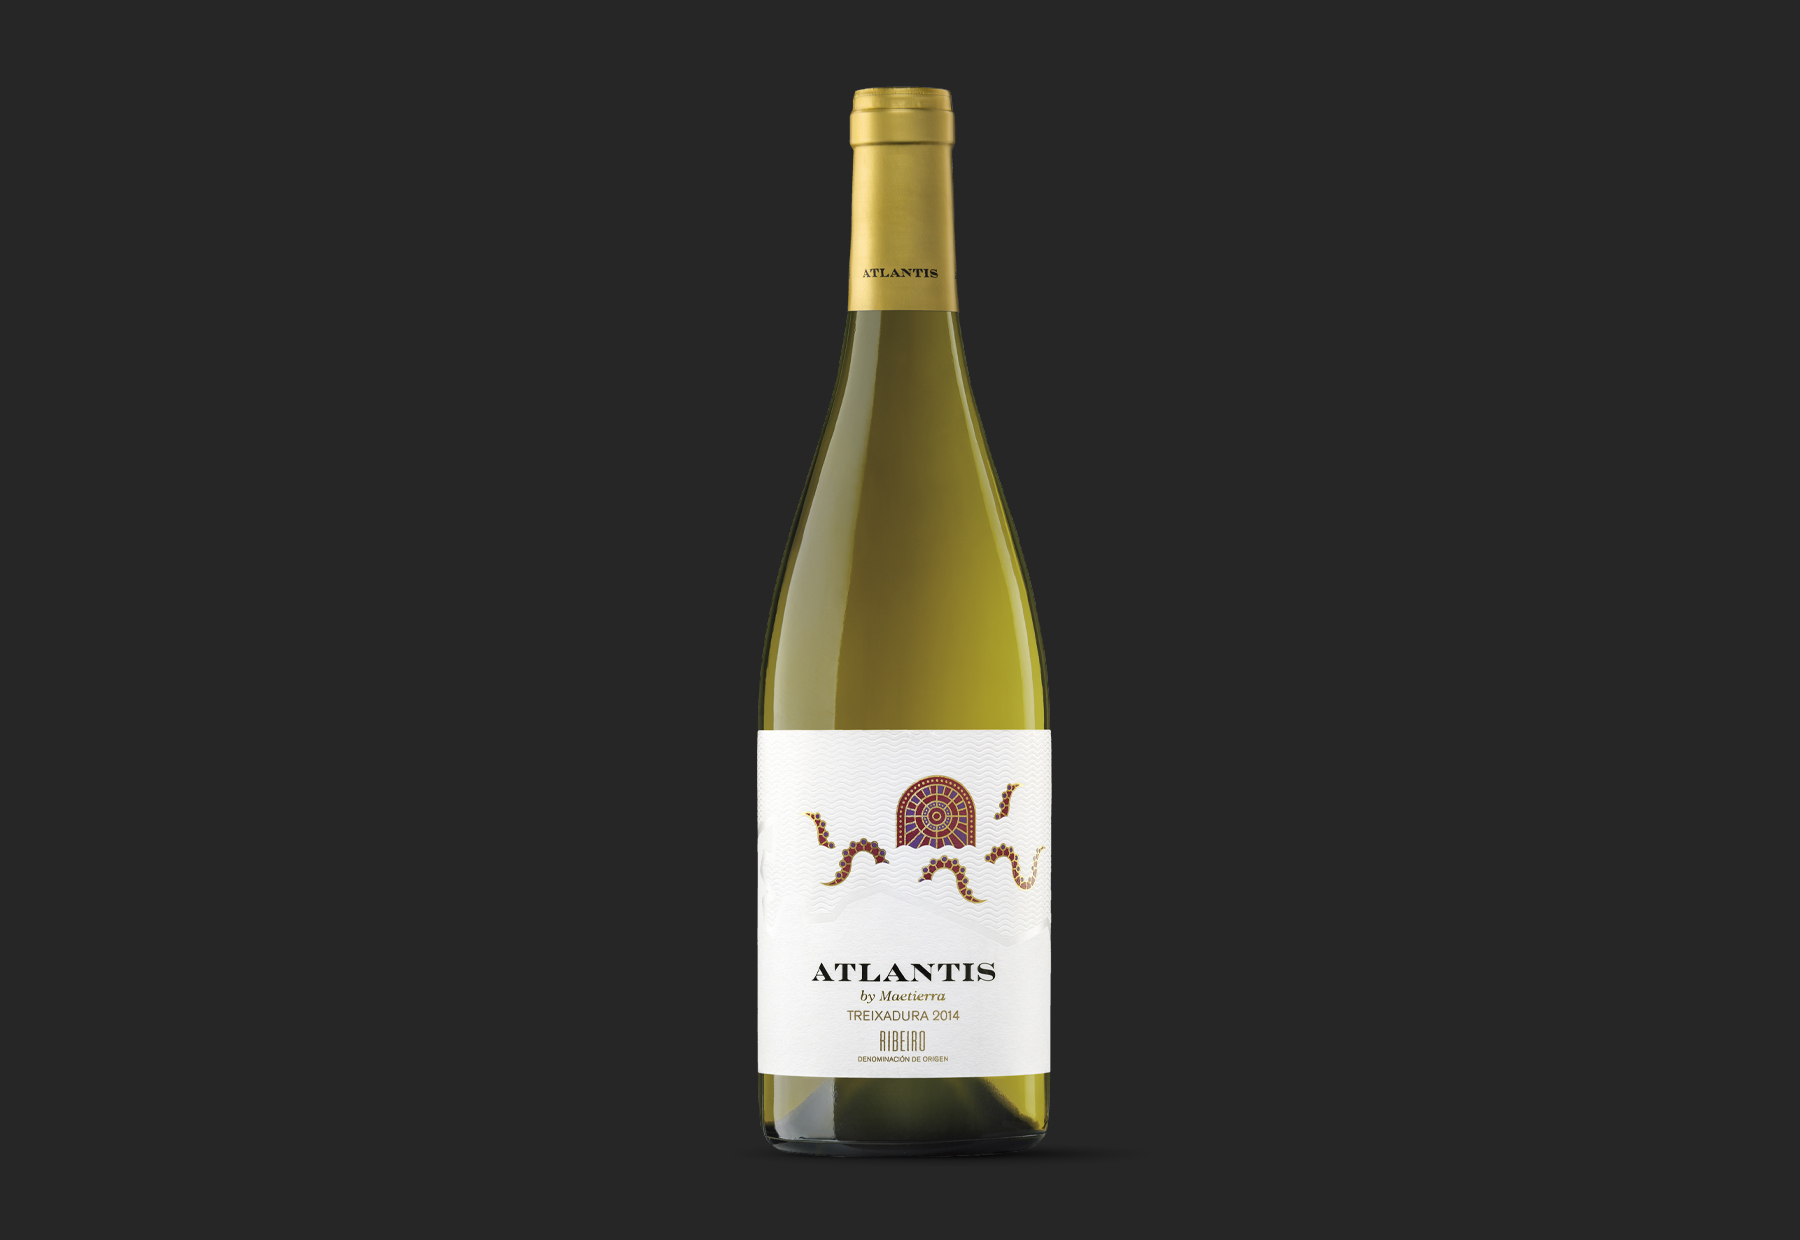 Atlantis Wines Under The Influx of The Atlantic Designed by Moruba